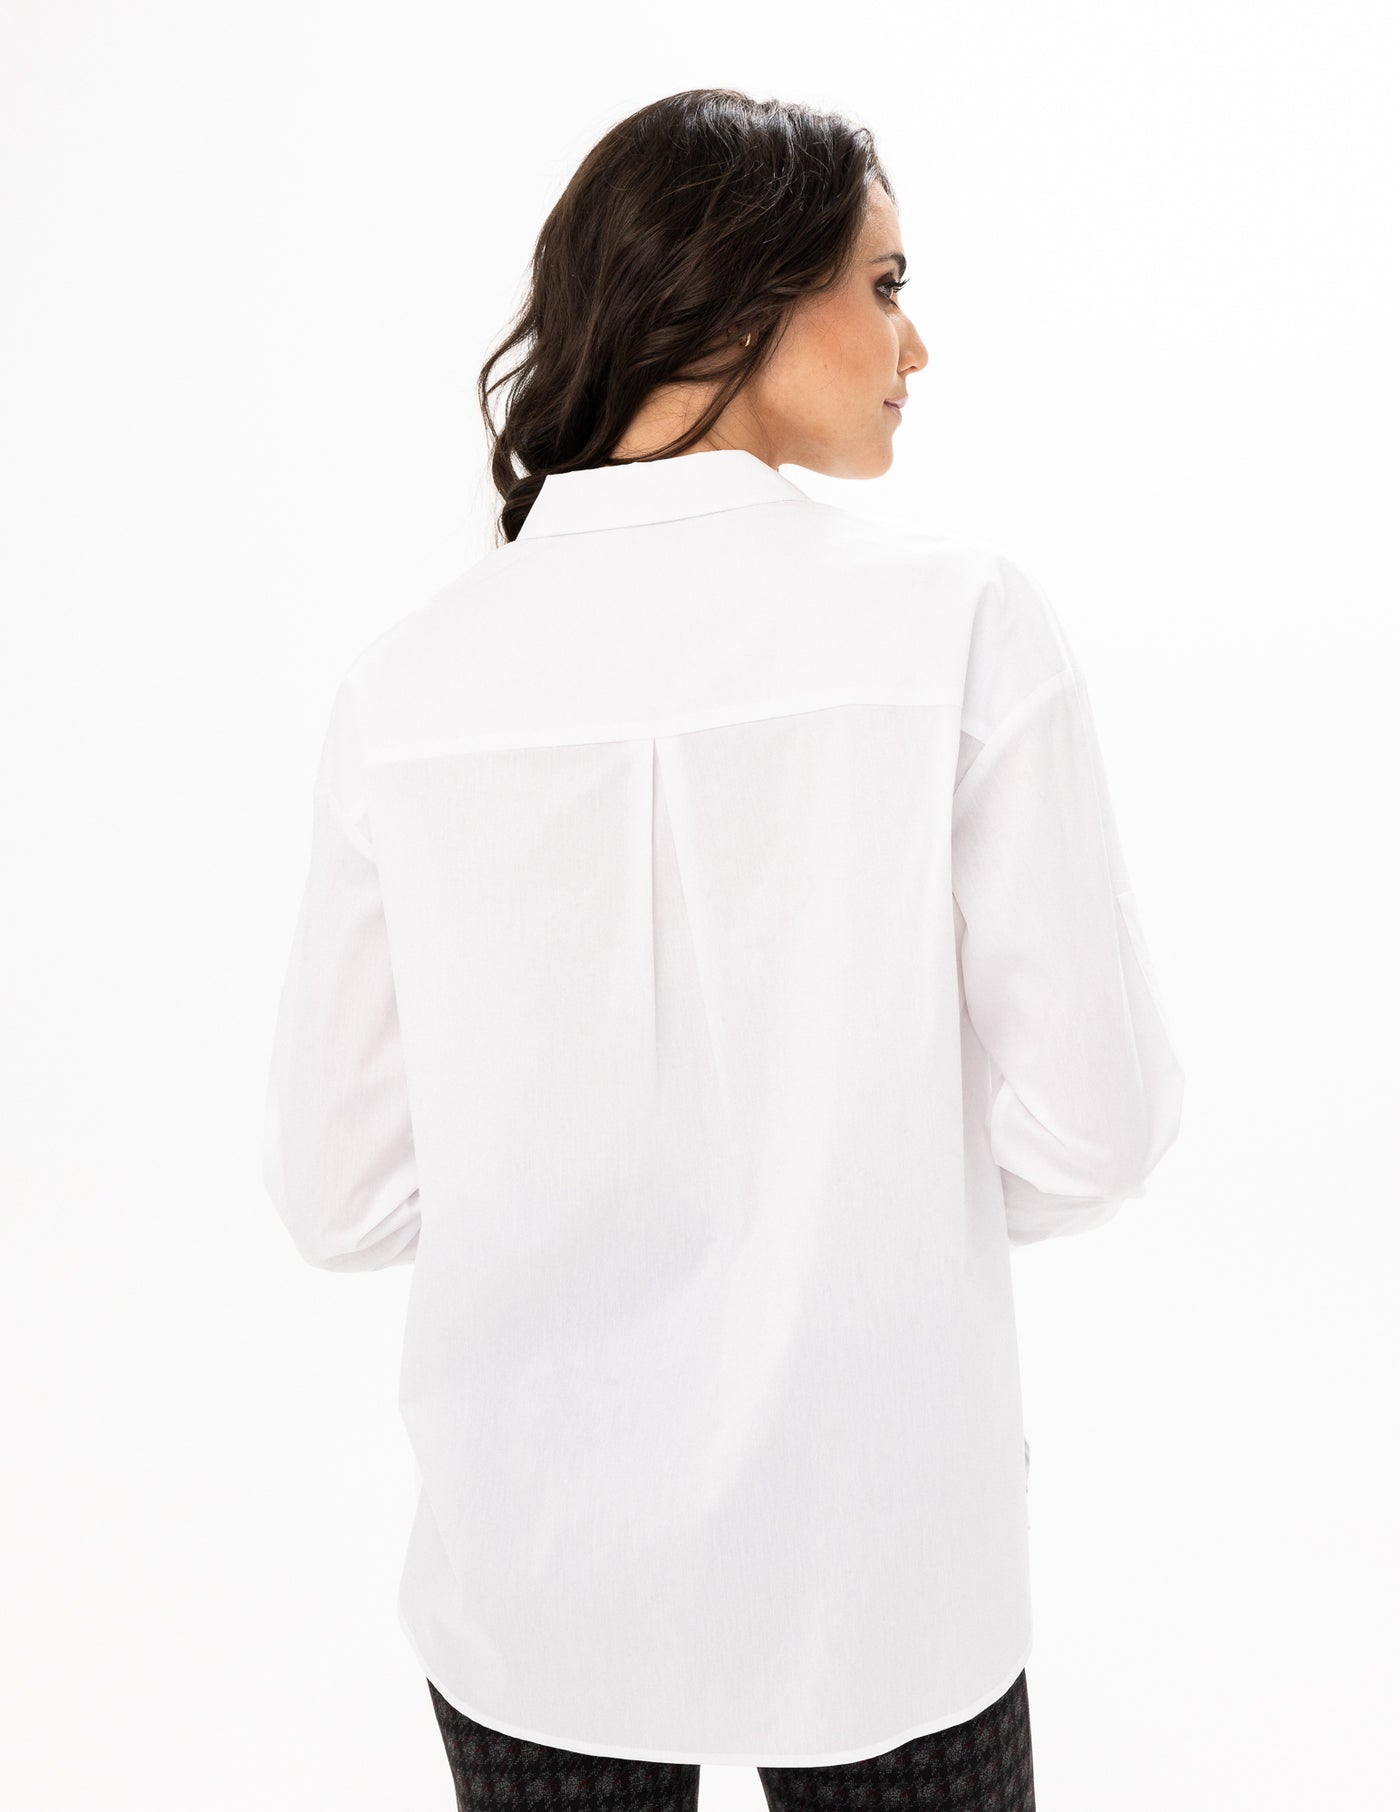 Long Sleeve Blouse (White)